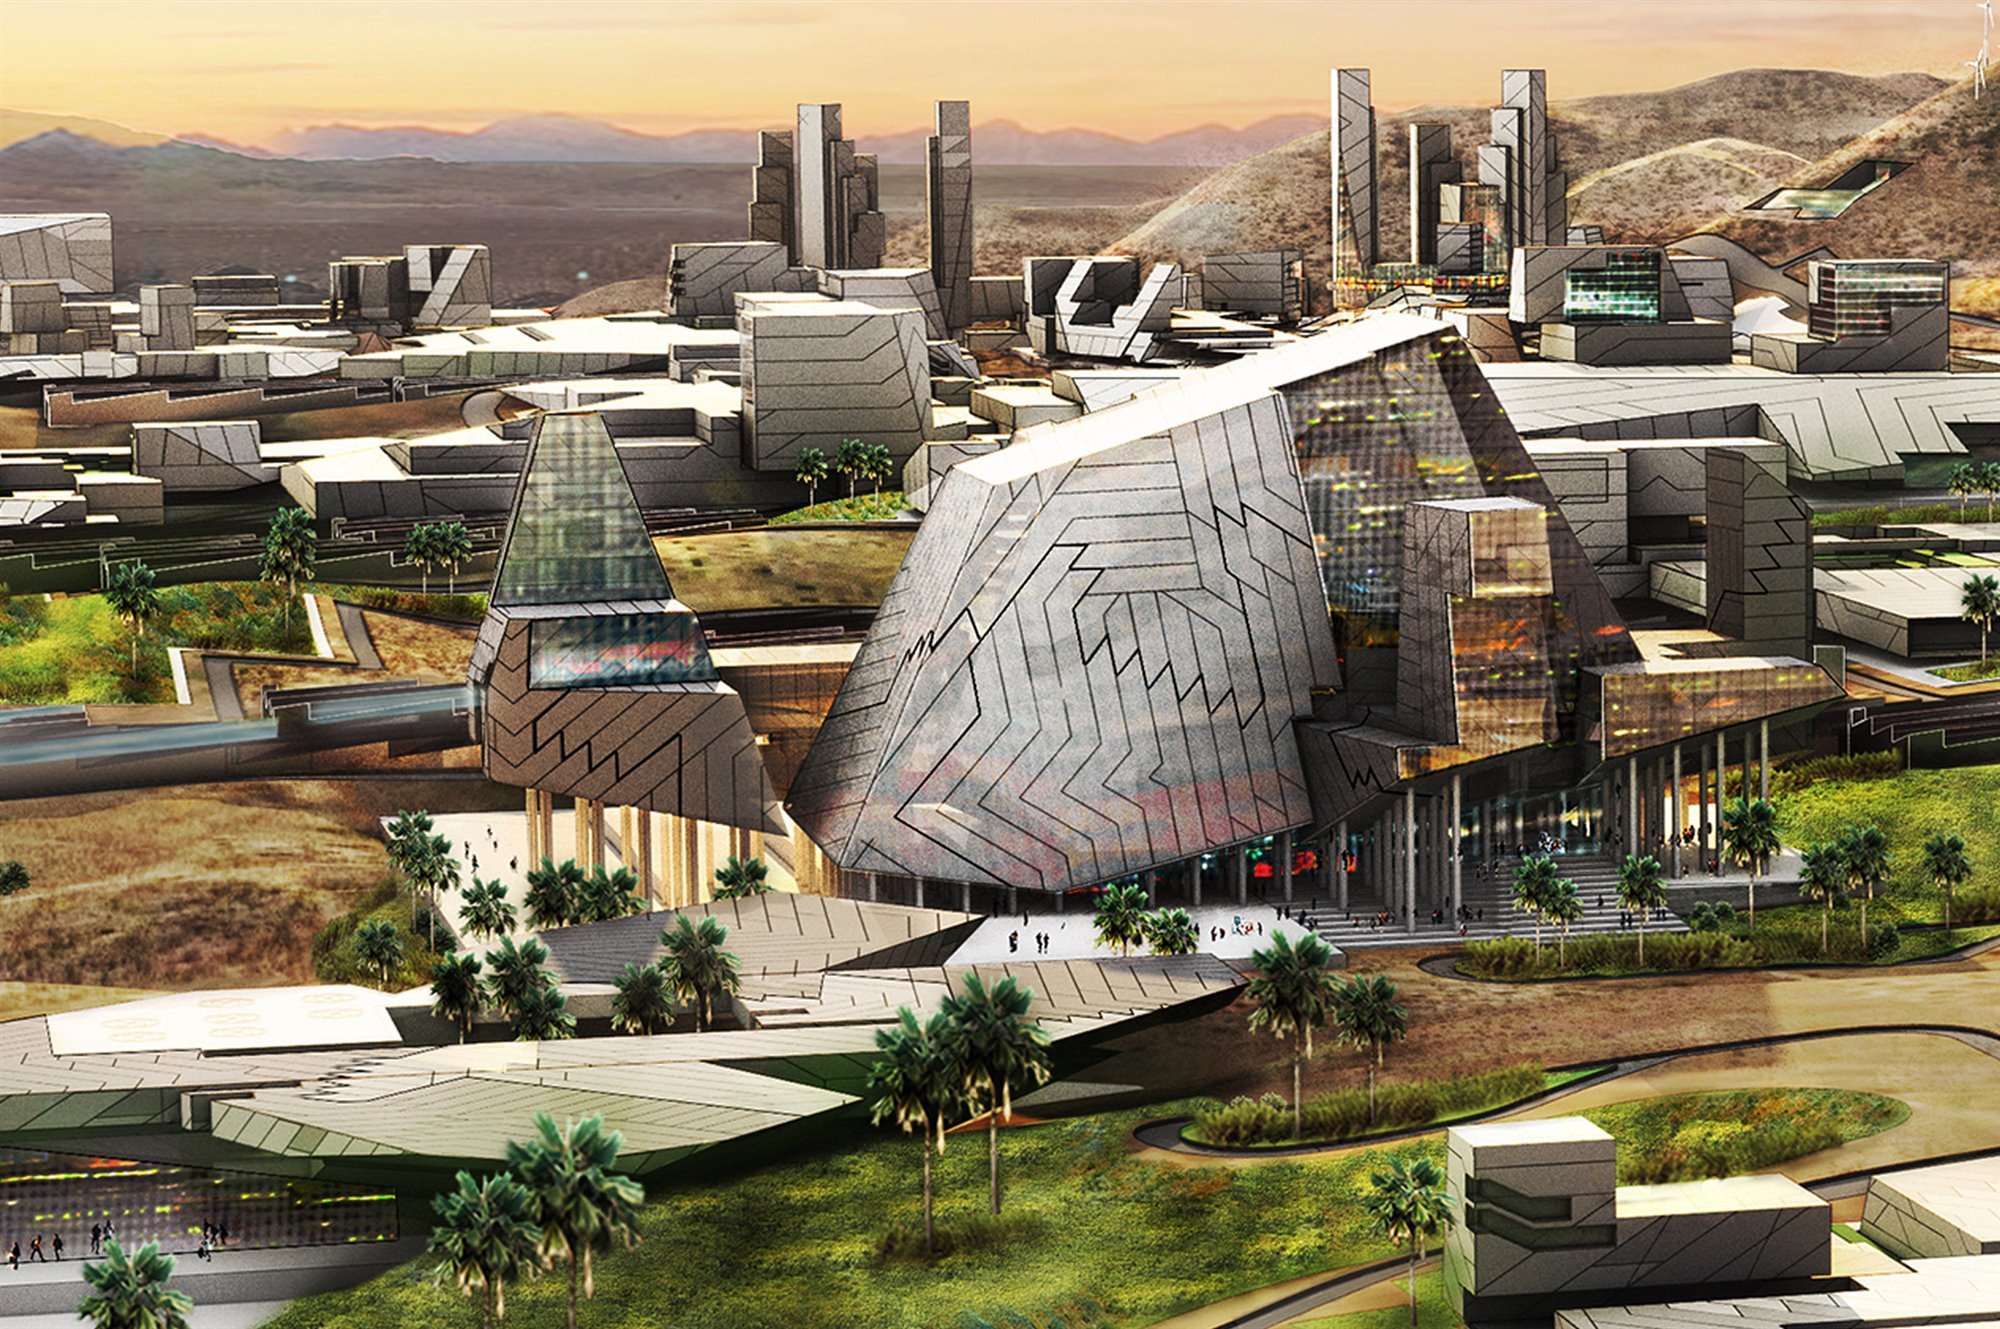 innovation-park-blockchains-smart-city-nevada-eyrc-architects-tom-wiscombe-architecture 3